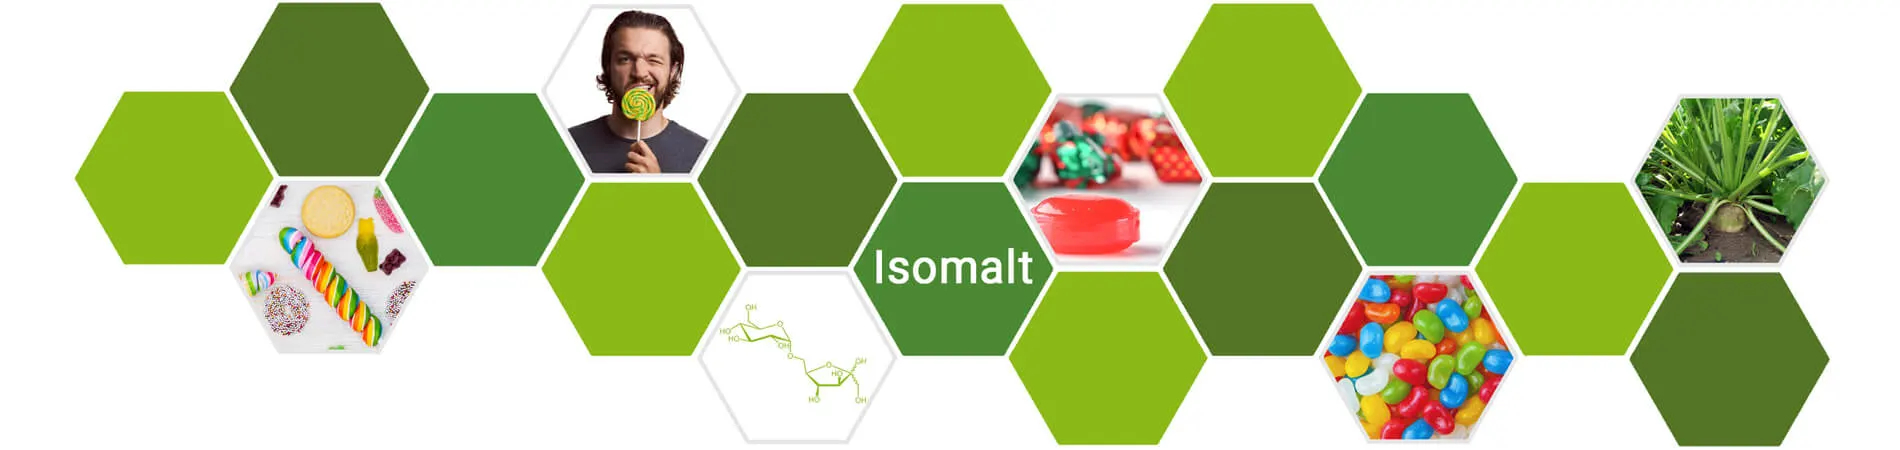 What is Isomalt? Isomalt: Information and interesting...